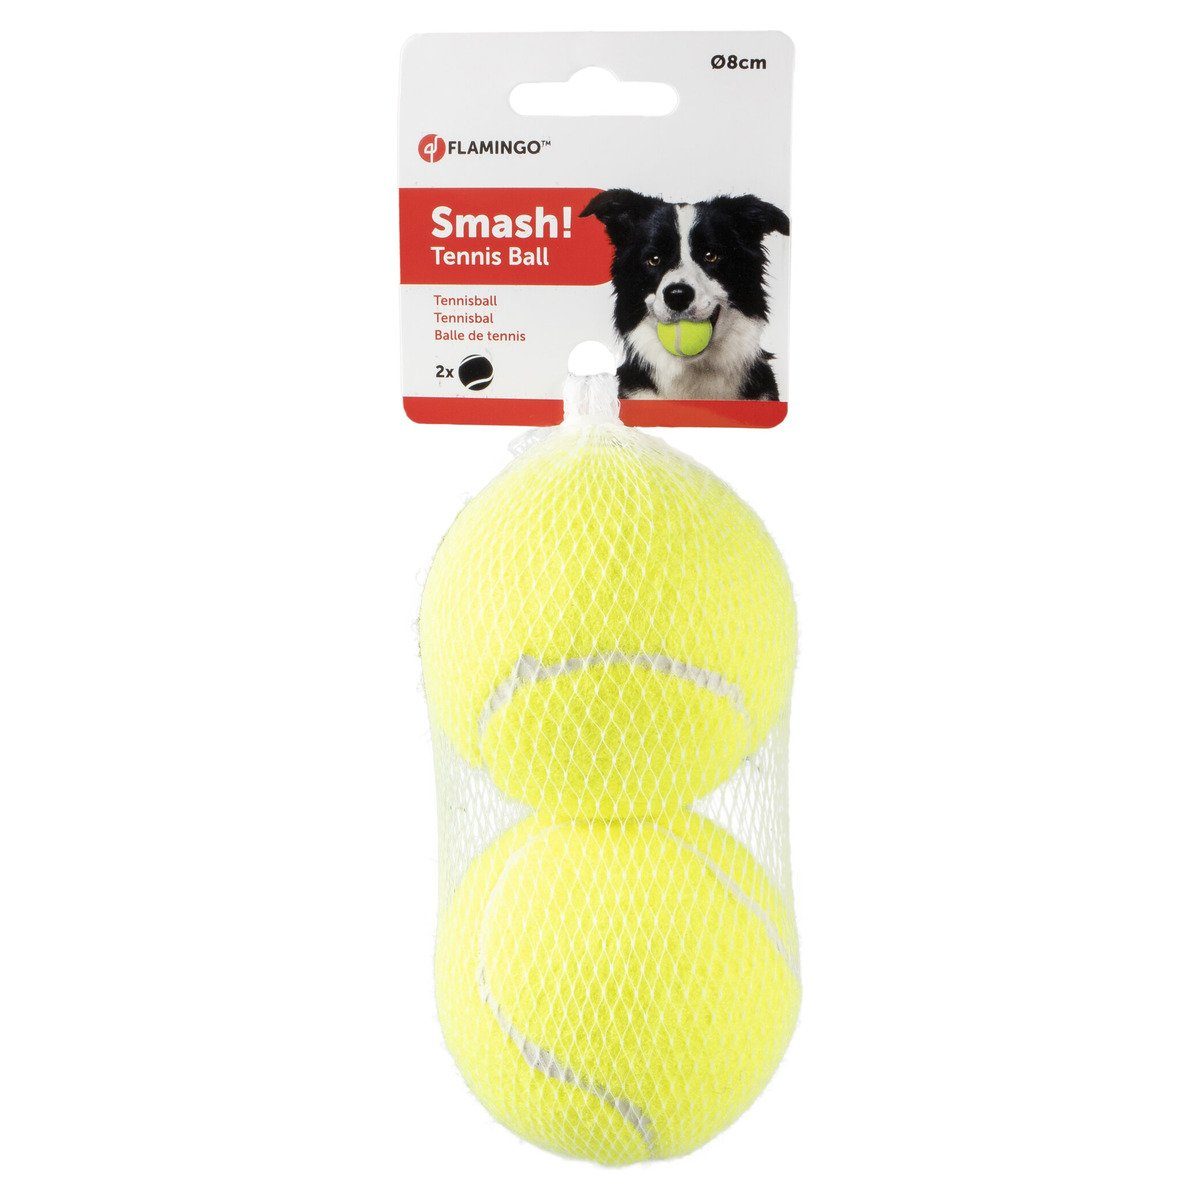 Spielball Flamingo gelb Hundespielzeug Smash Tennisball